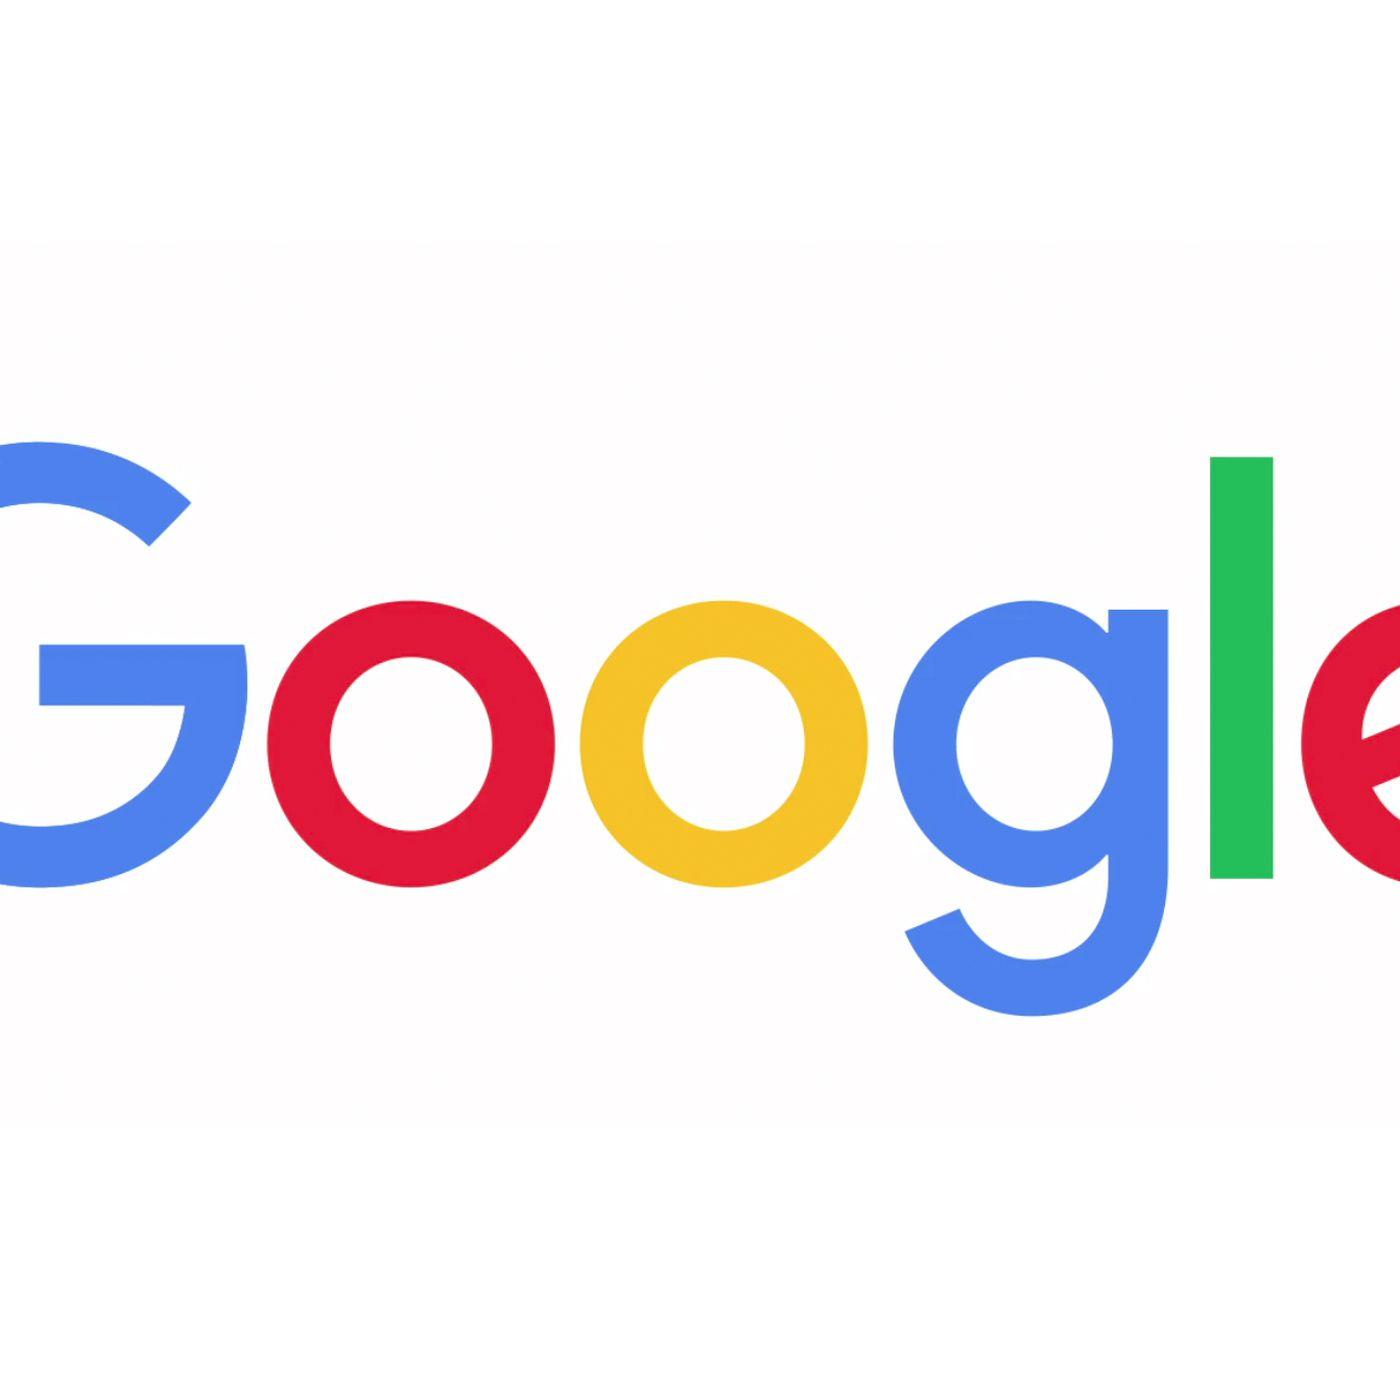 Single Circle Logo - Google has a new logo - The Verge